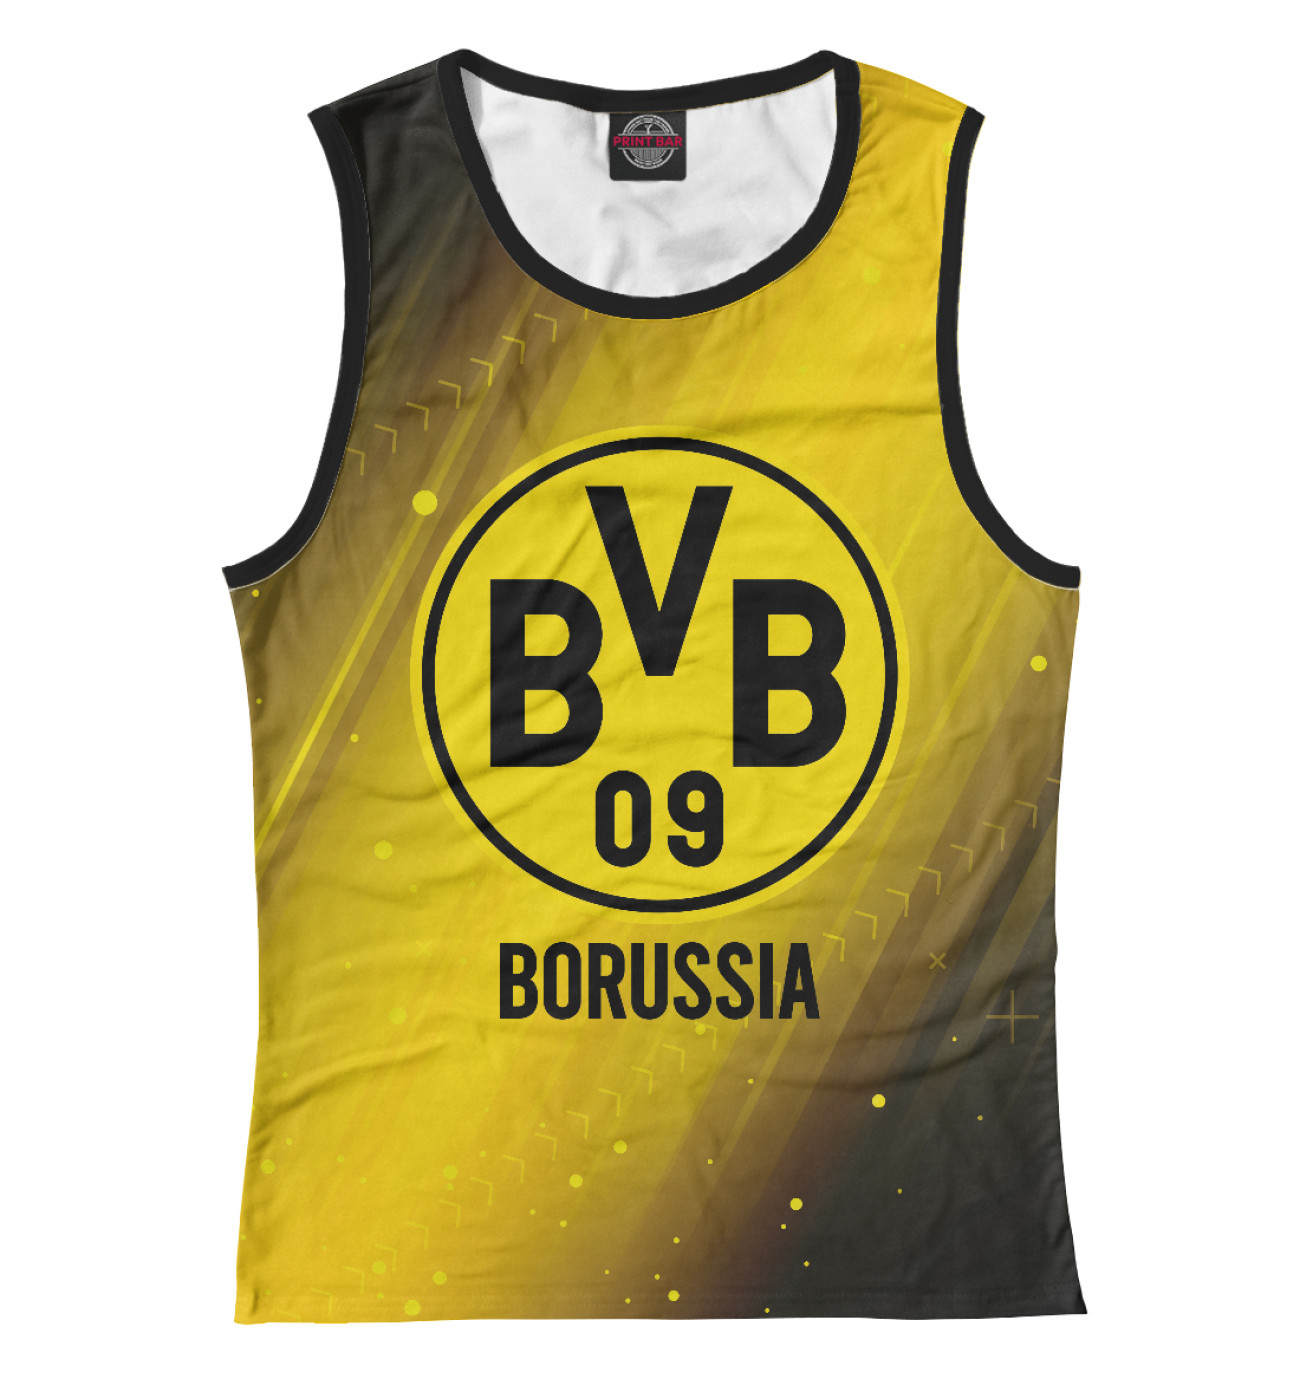 Женская Майка Borussia / Боруссия, артикул: BRS-568849-may-1